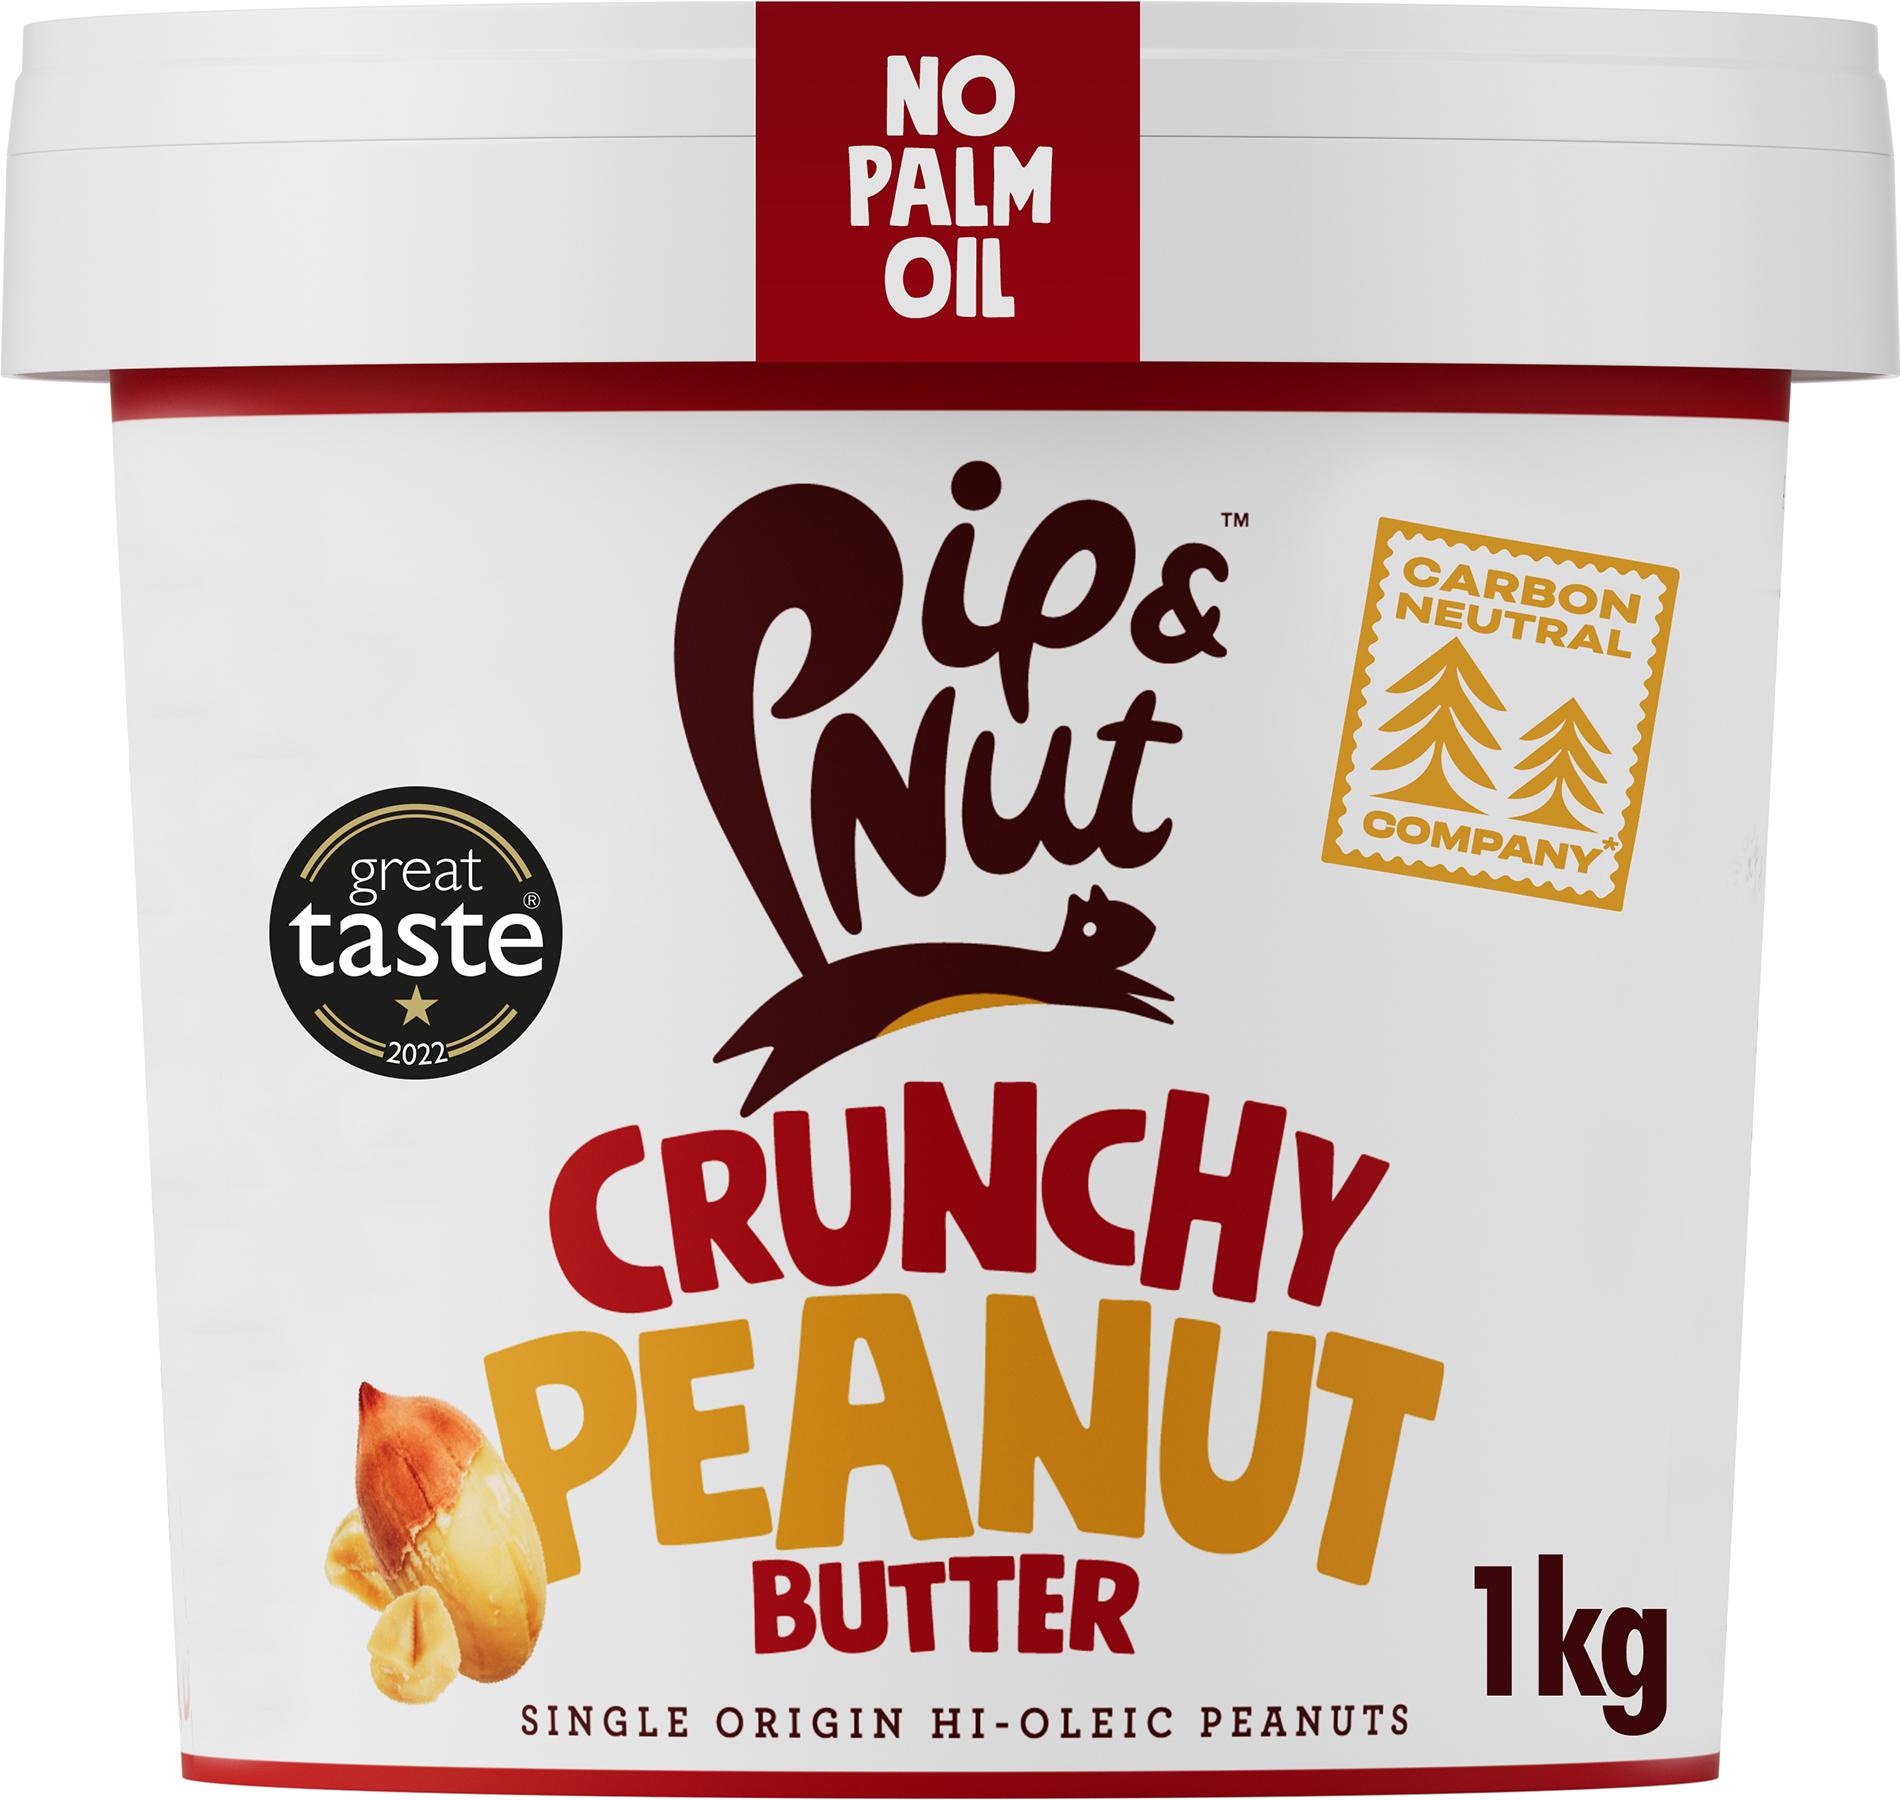 PipandNut PipandNut Crunchy Peanut Butter 1kg